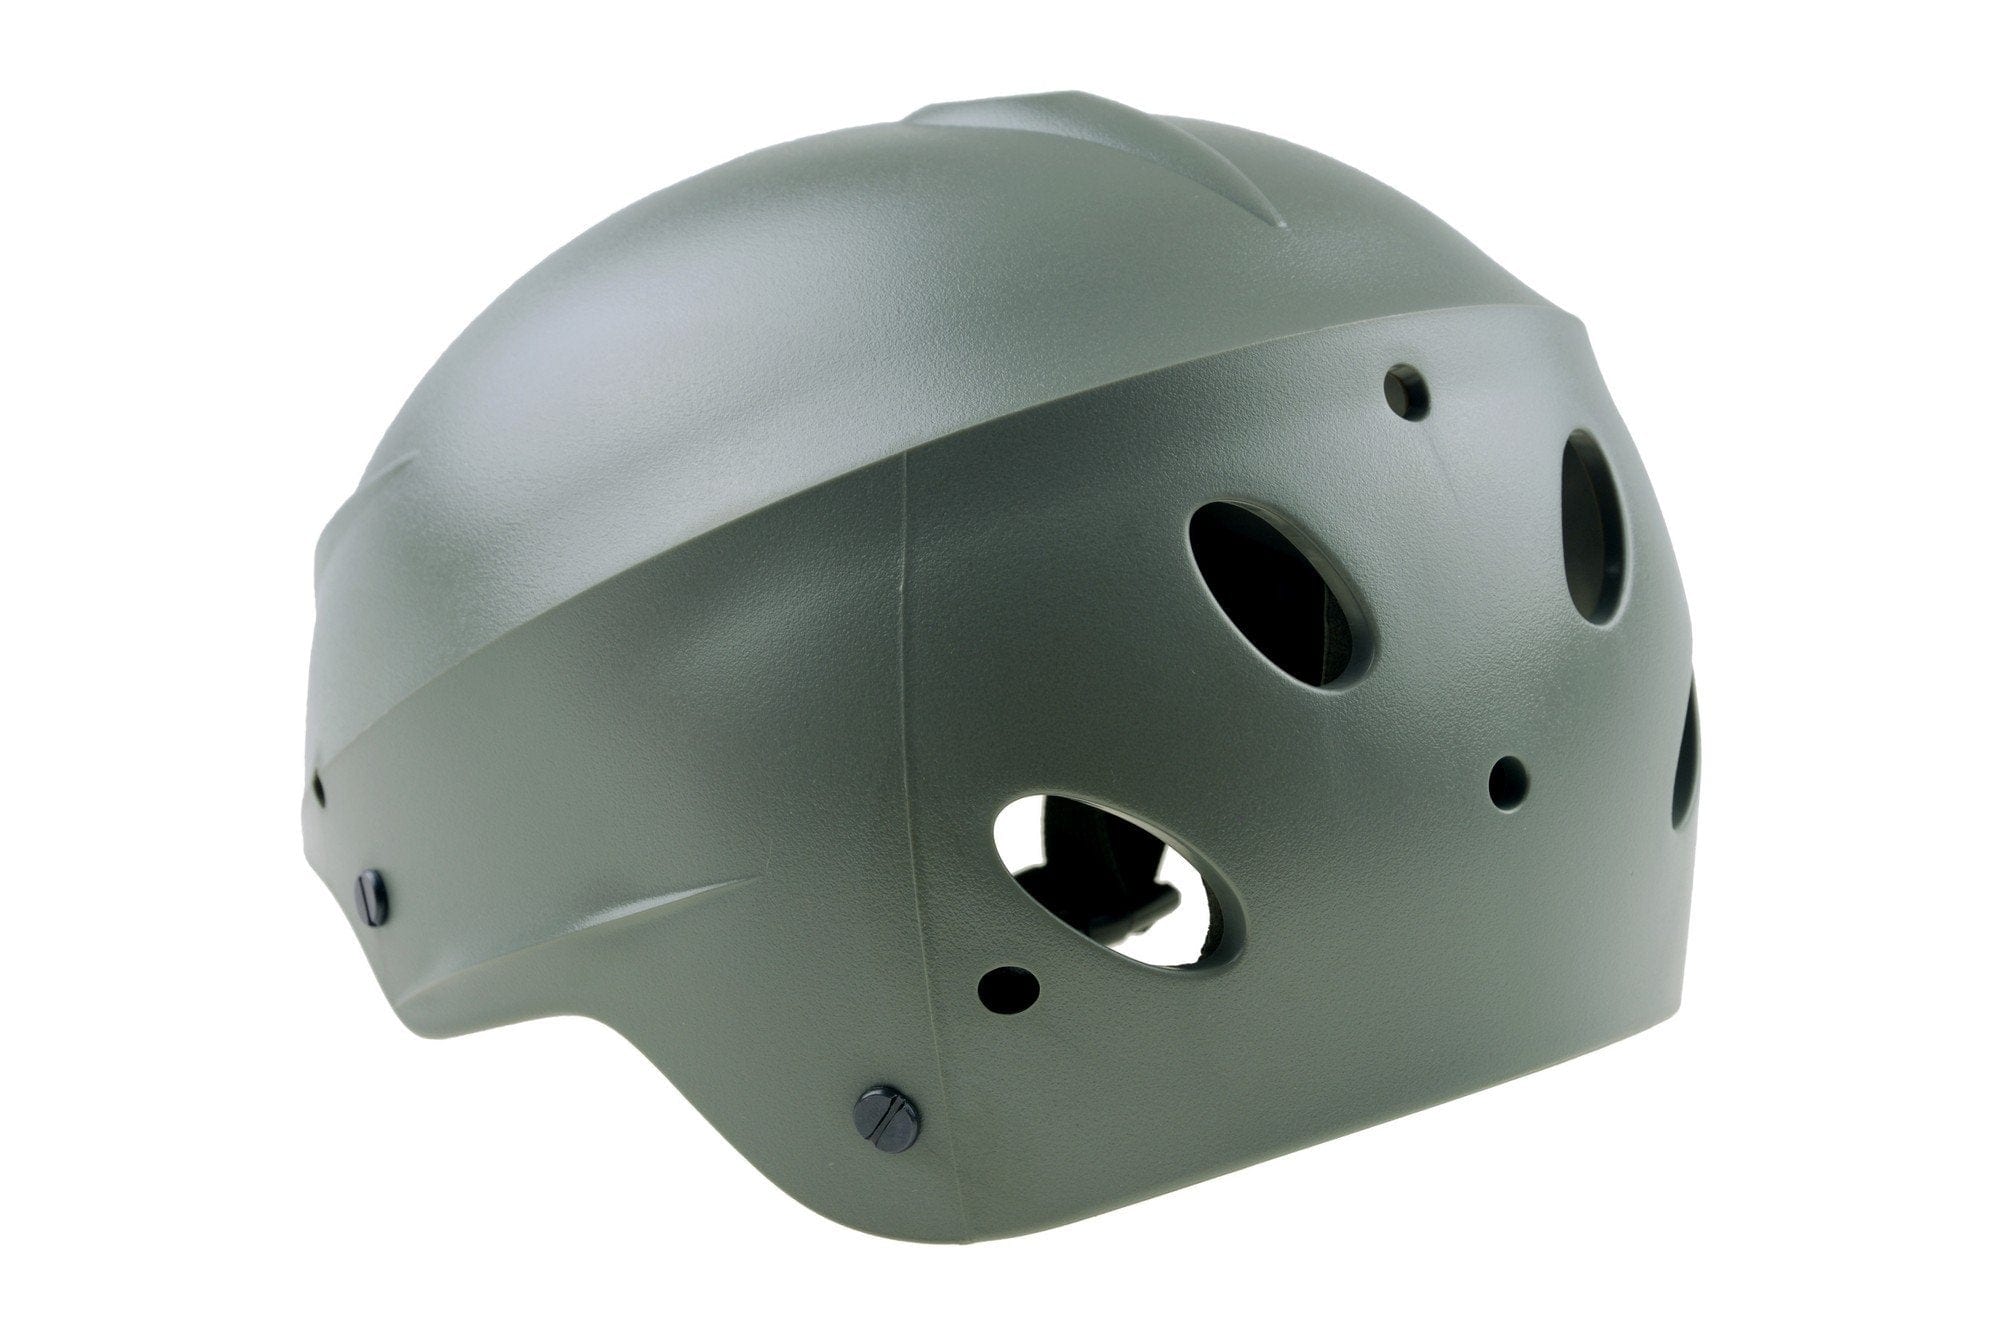 SFR ECO helmet replica - Foliage Green by FMA on Airsoft Mania Europe